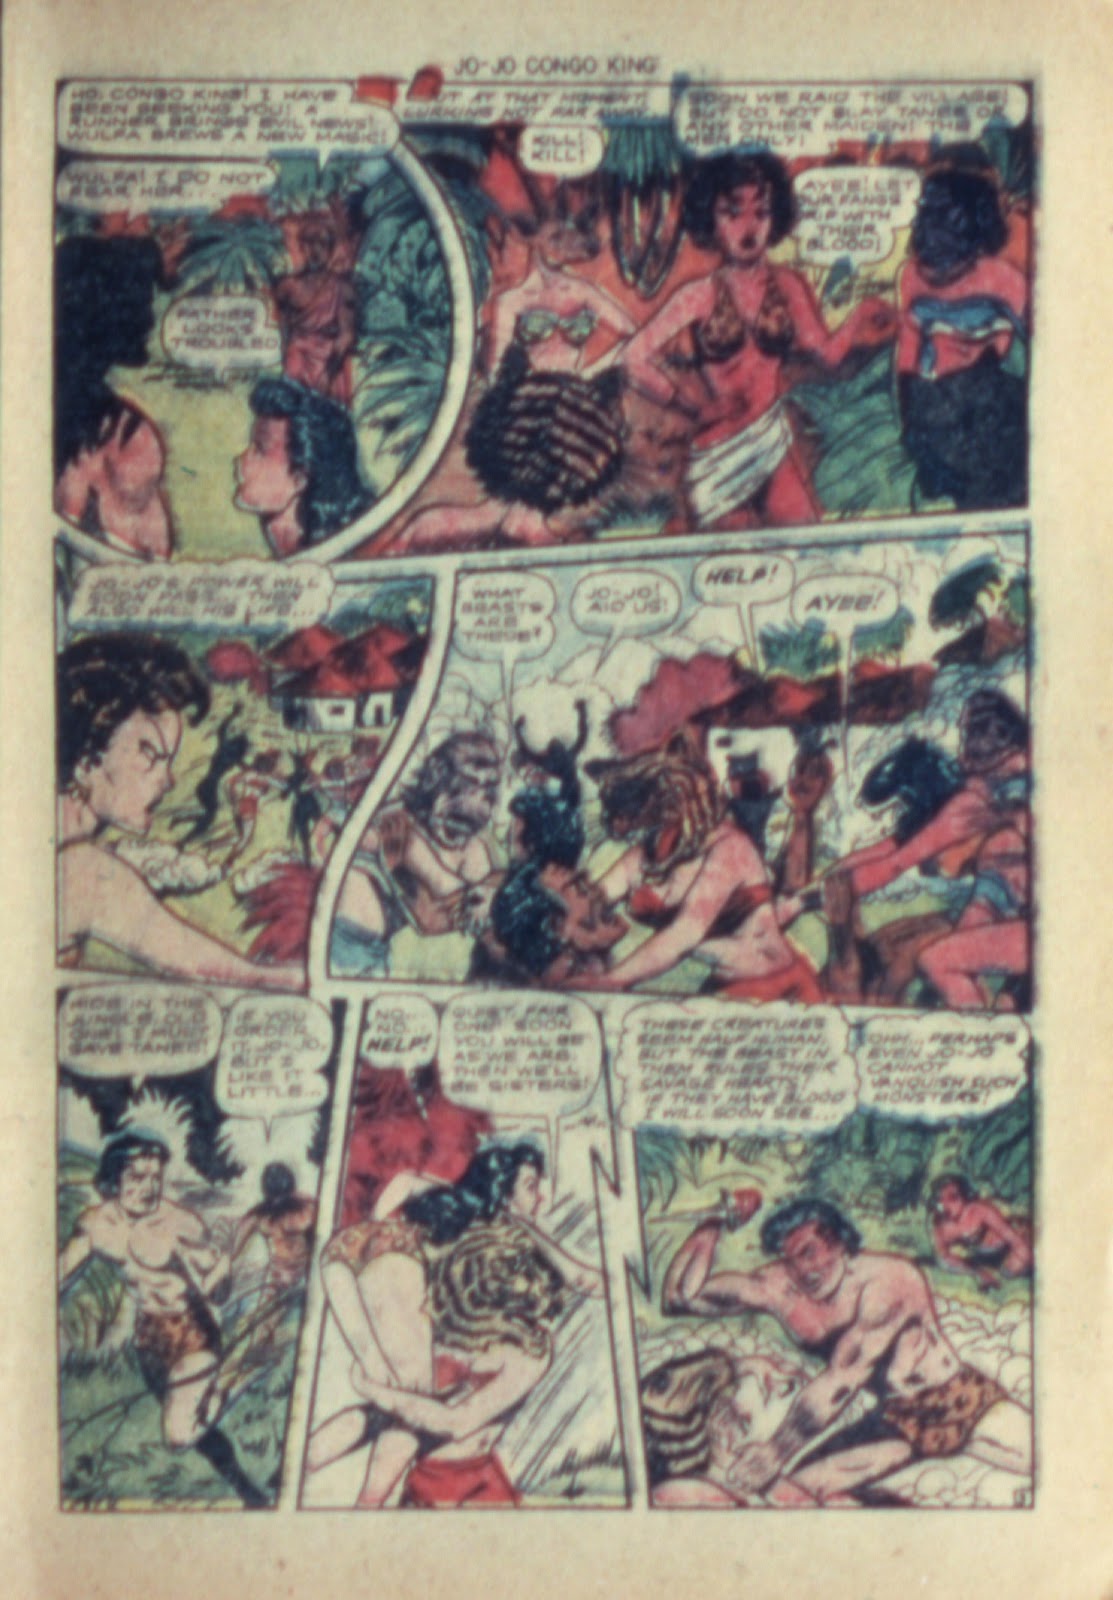 Jo-Jo Congo King issue 9 - Page 19